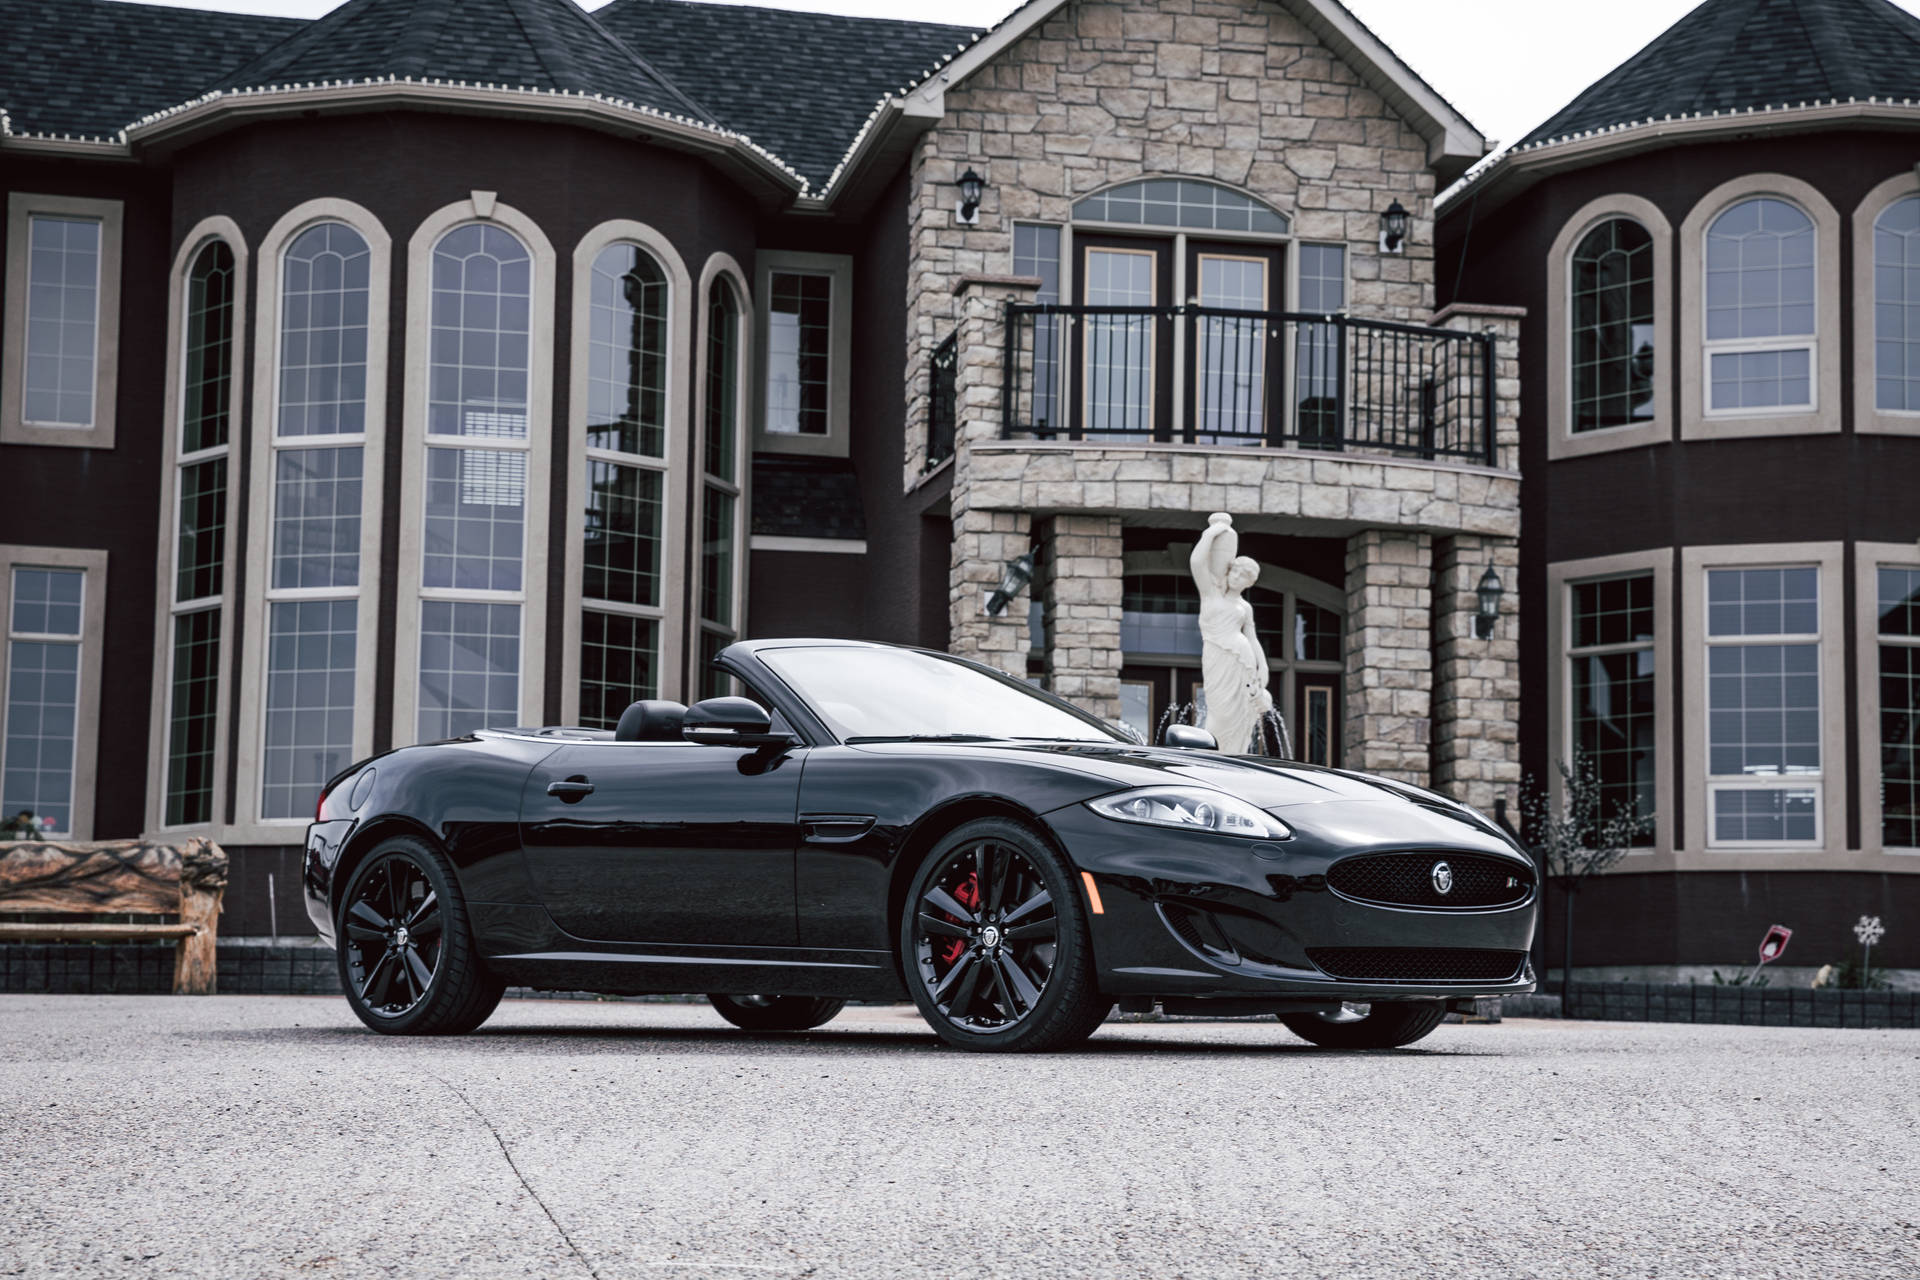 Black Convertible Maserati At Mansion Picture